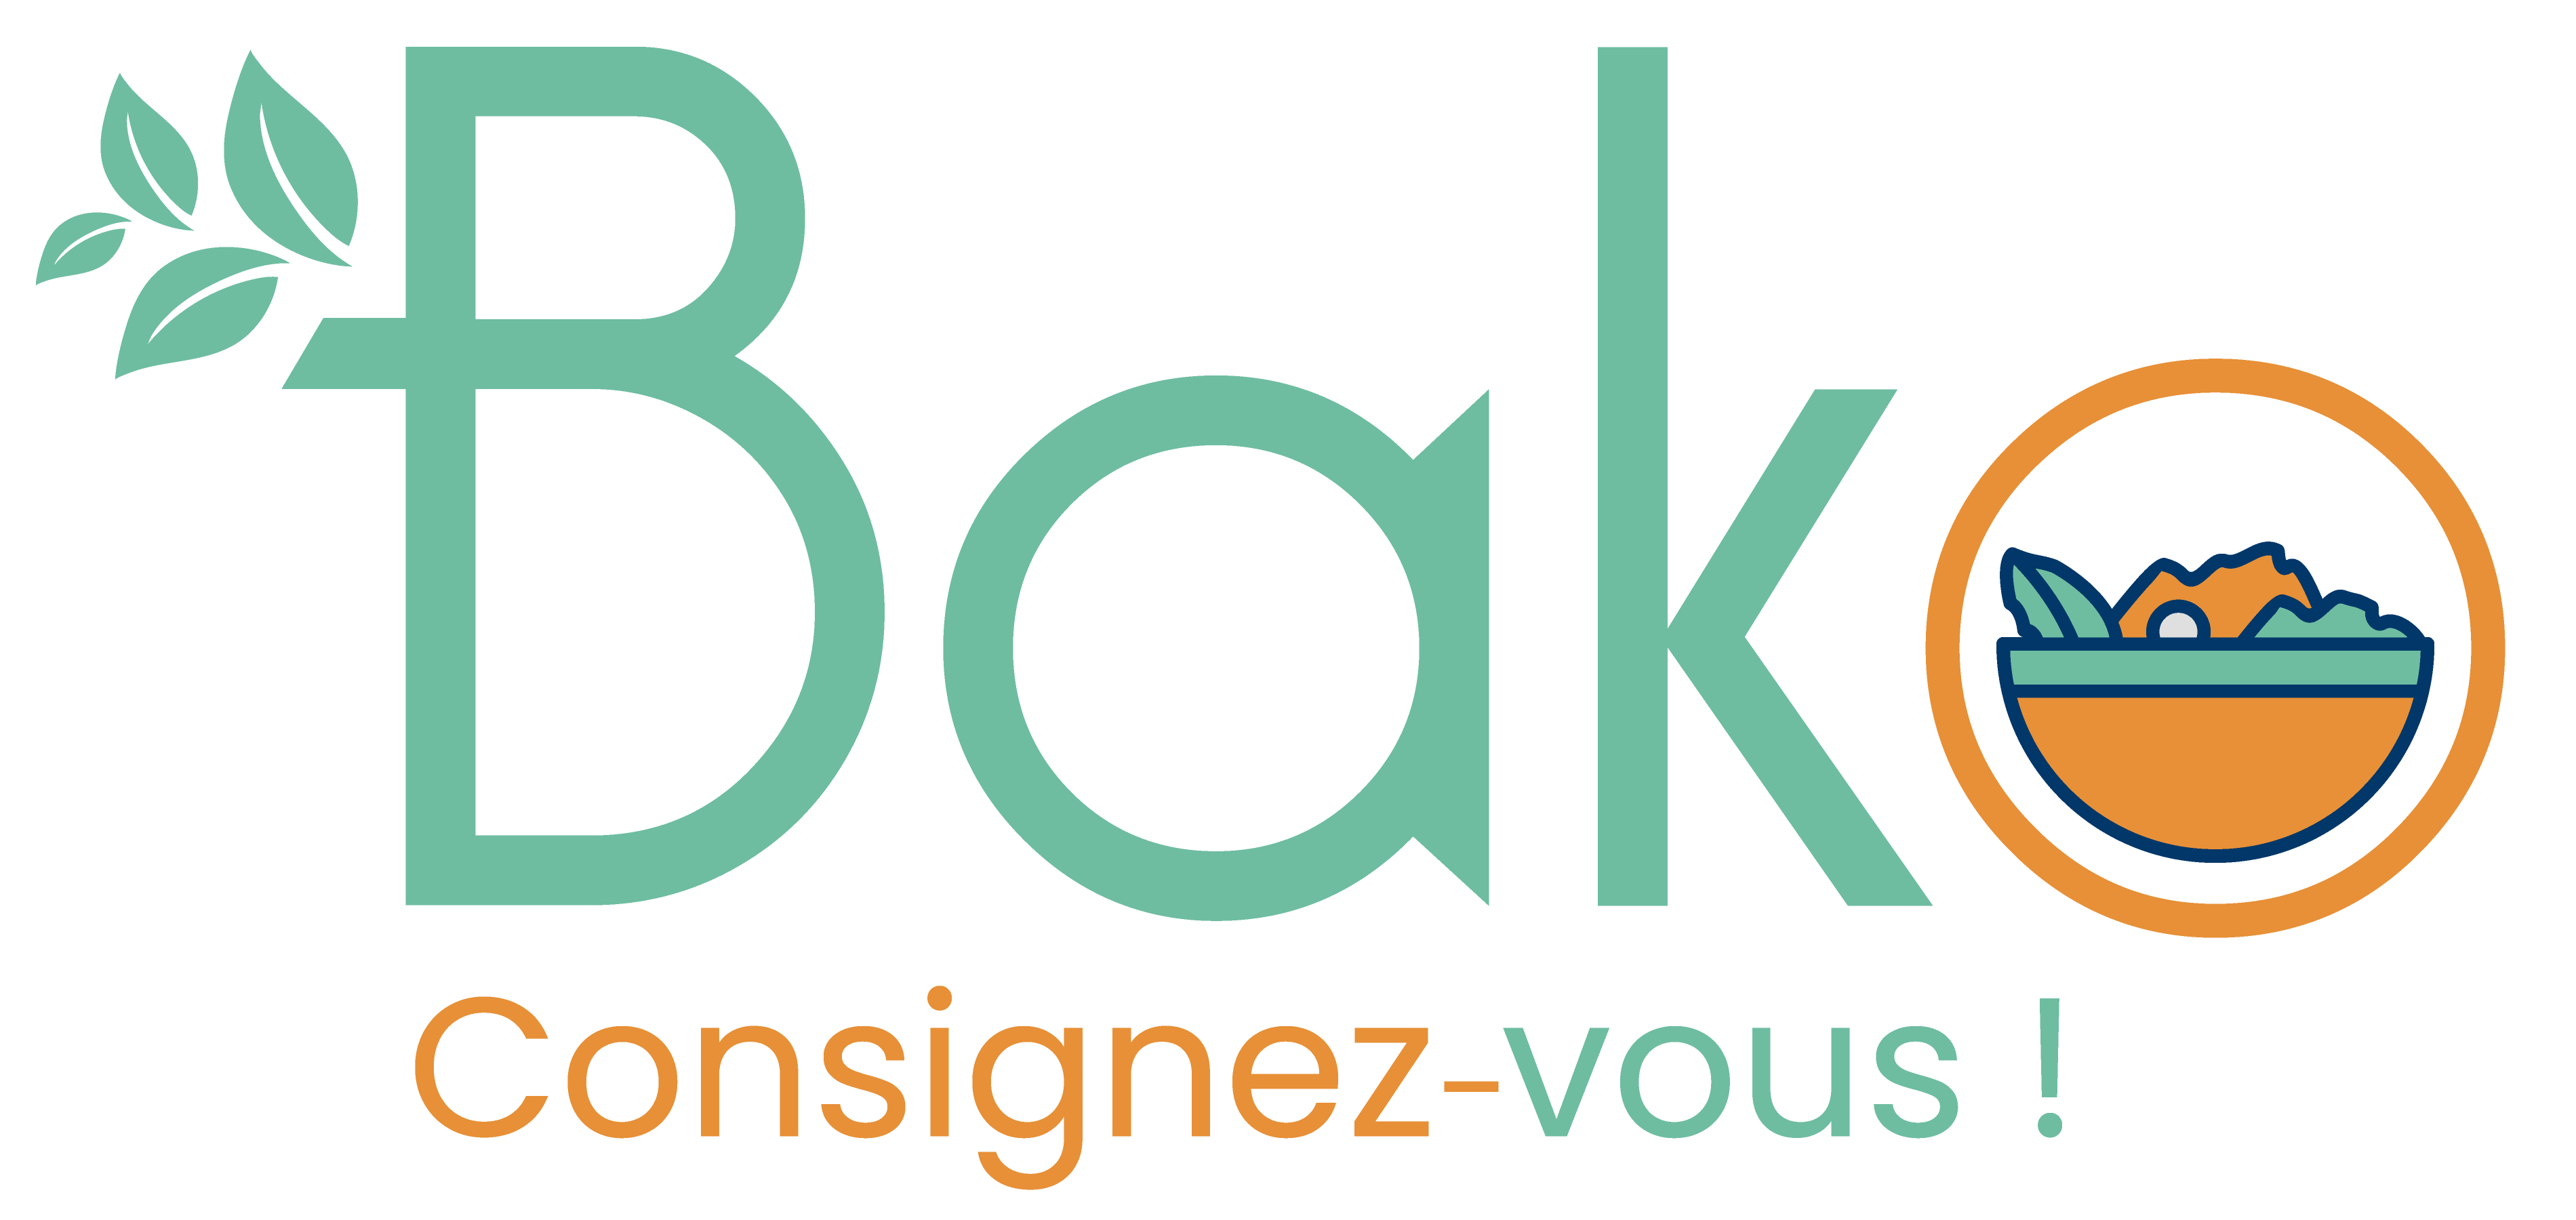 Bako consigne